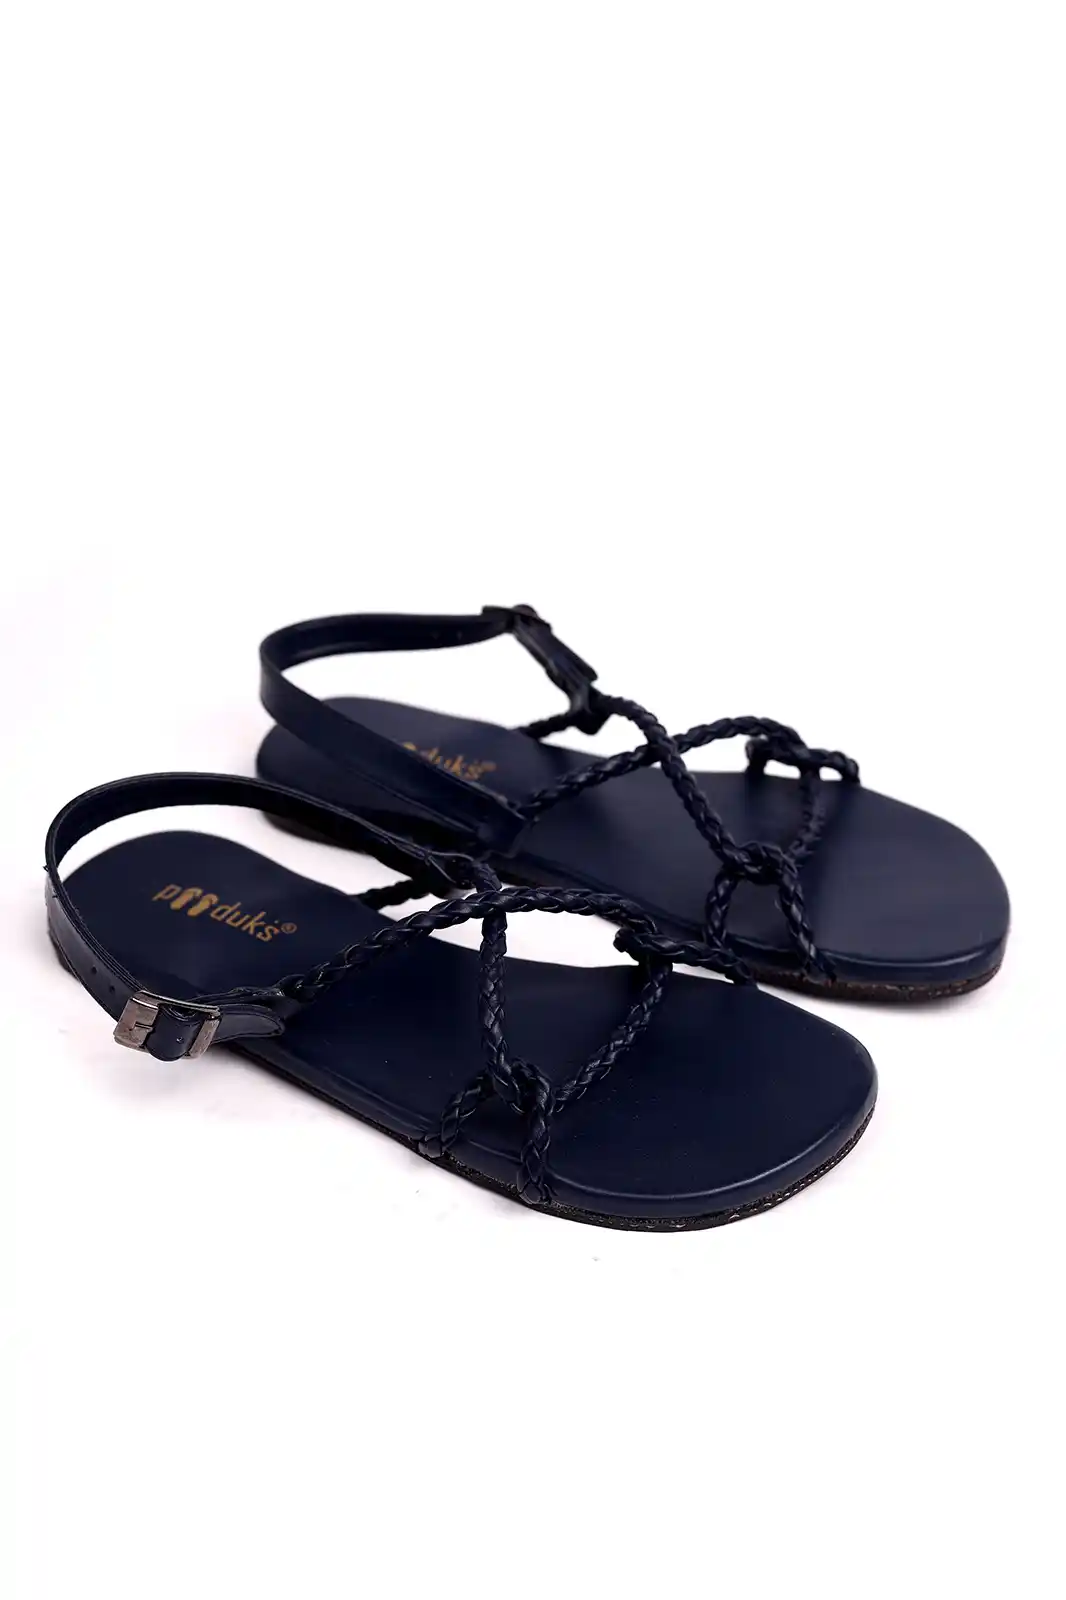 Source Fashion women's leopard print buckle flat sandals slippers on  m.alibaba.com